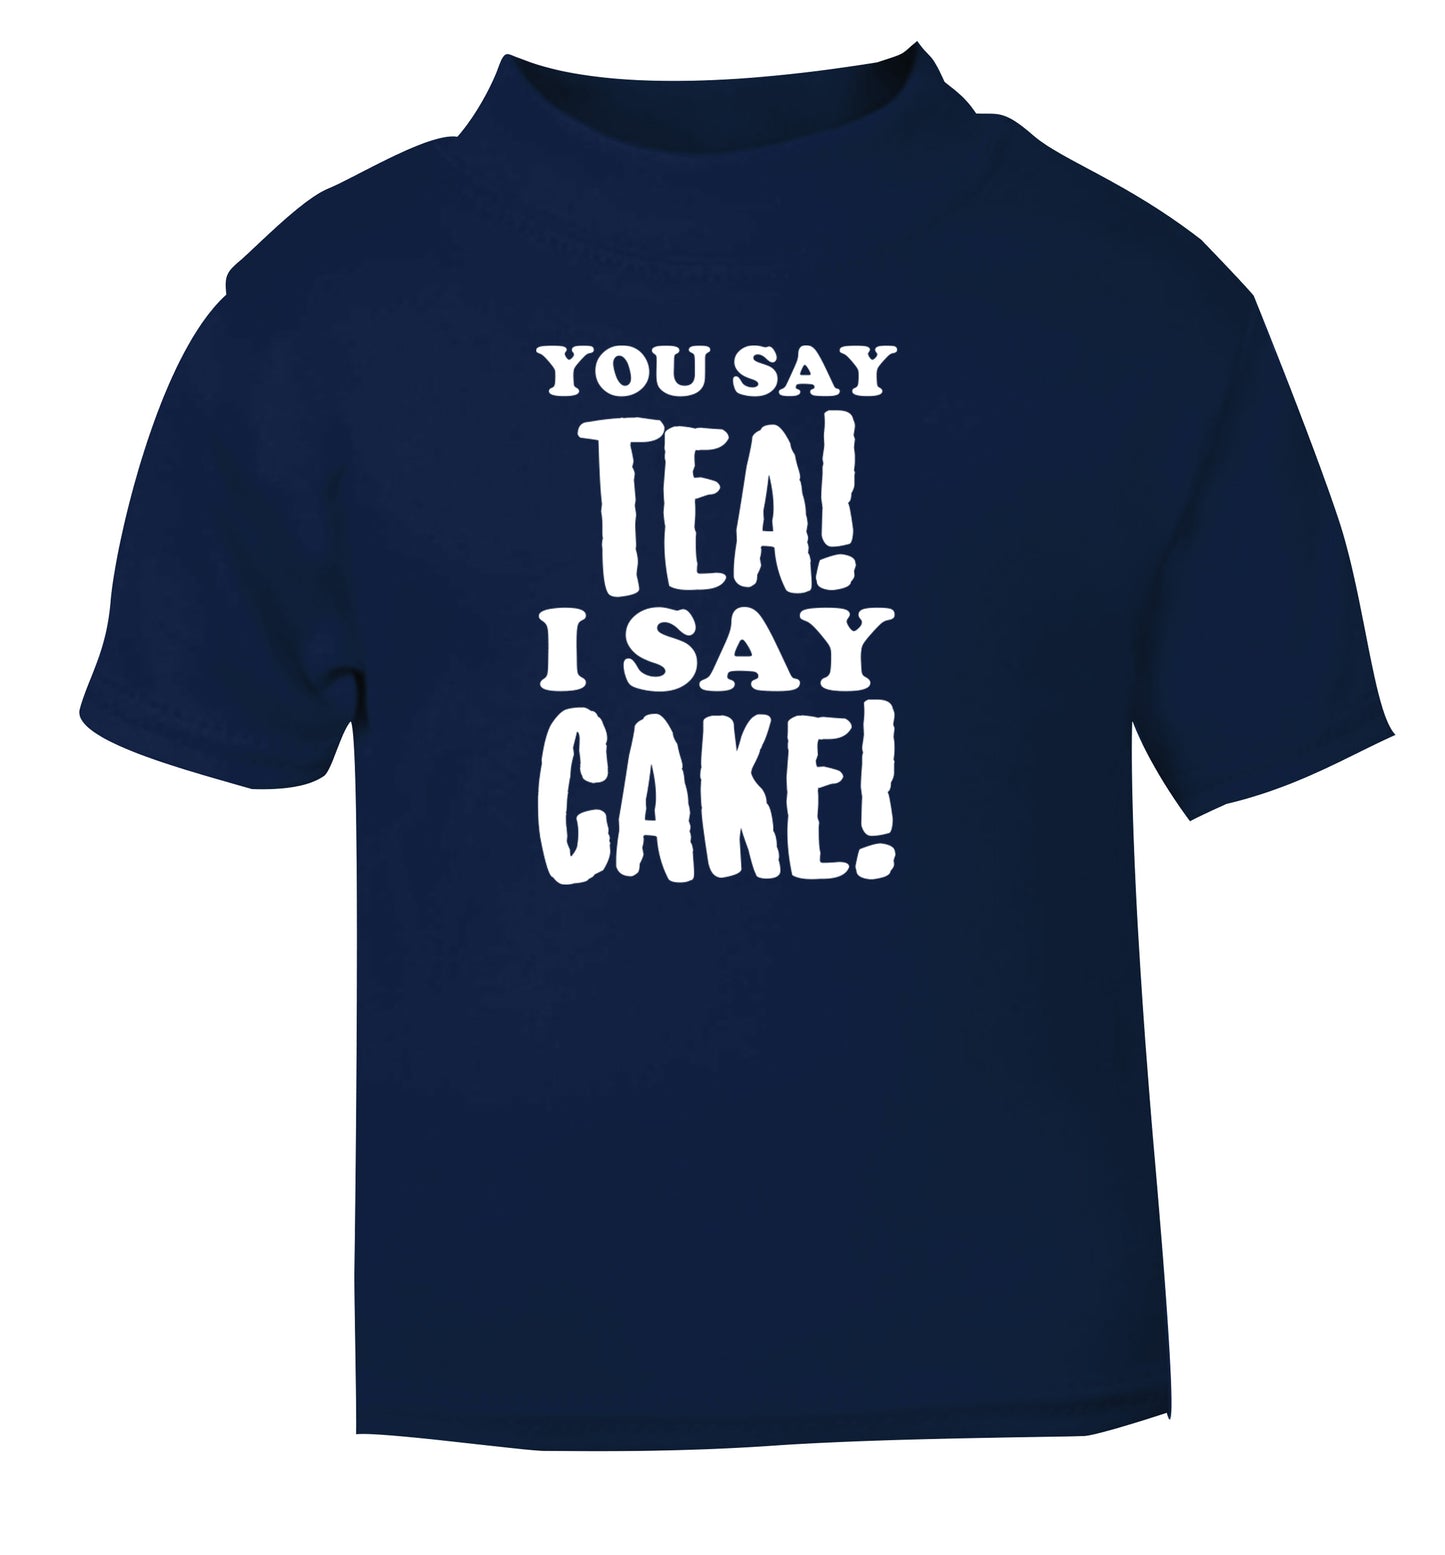 You say tea I say cake! navy Baby Toddler Tshirt 2 Years